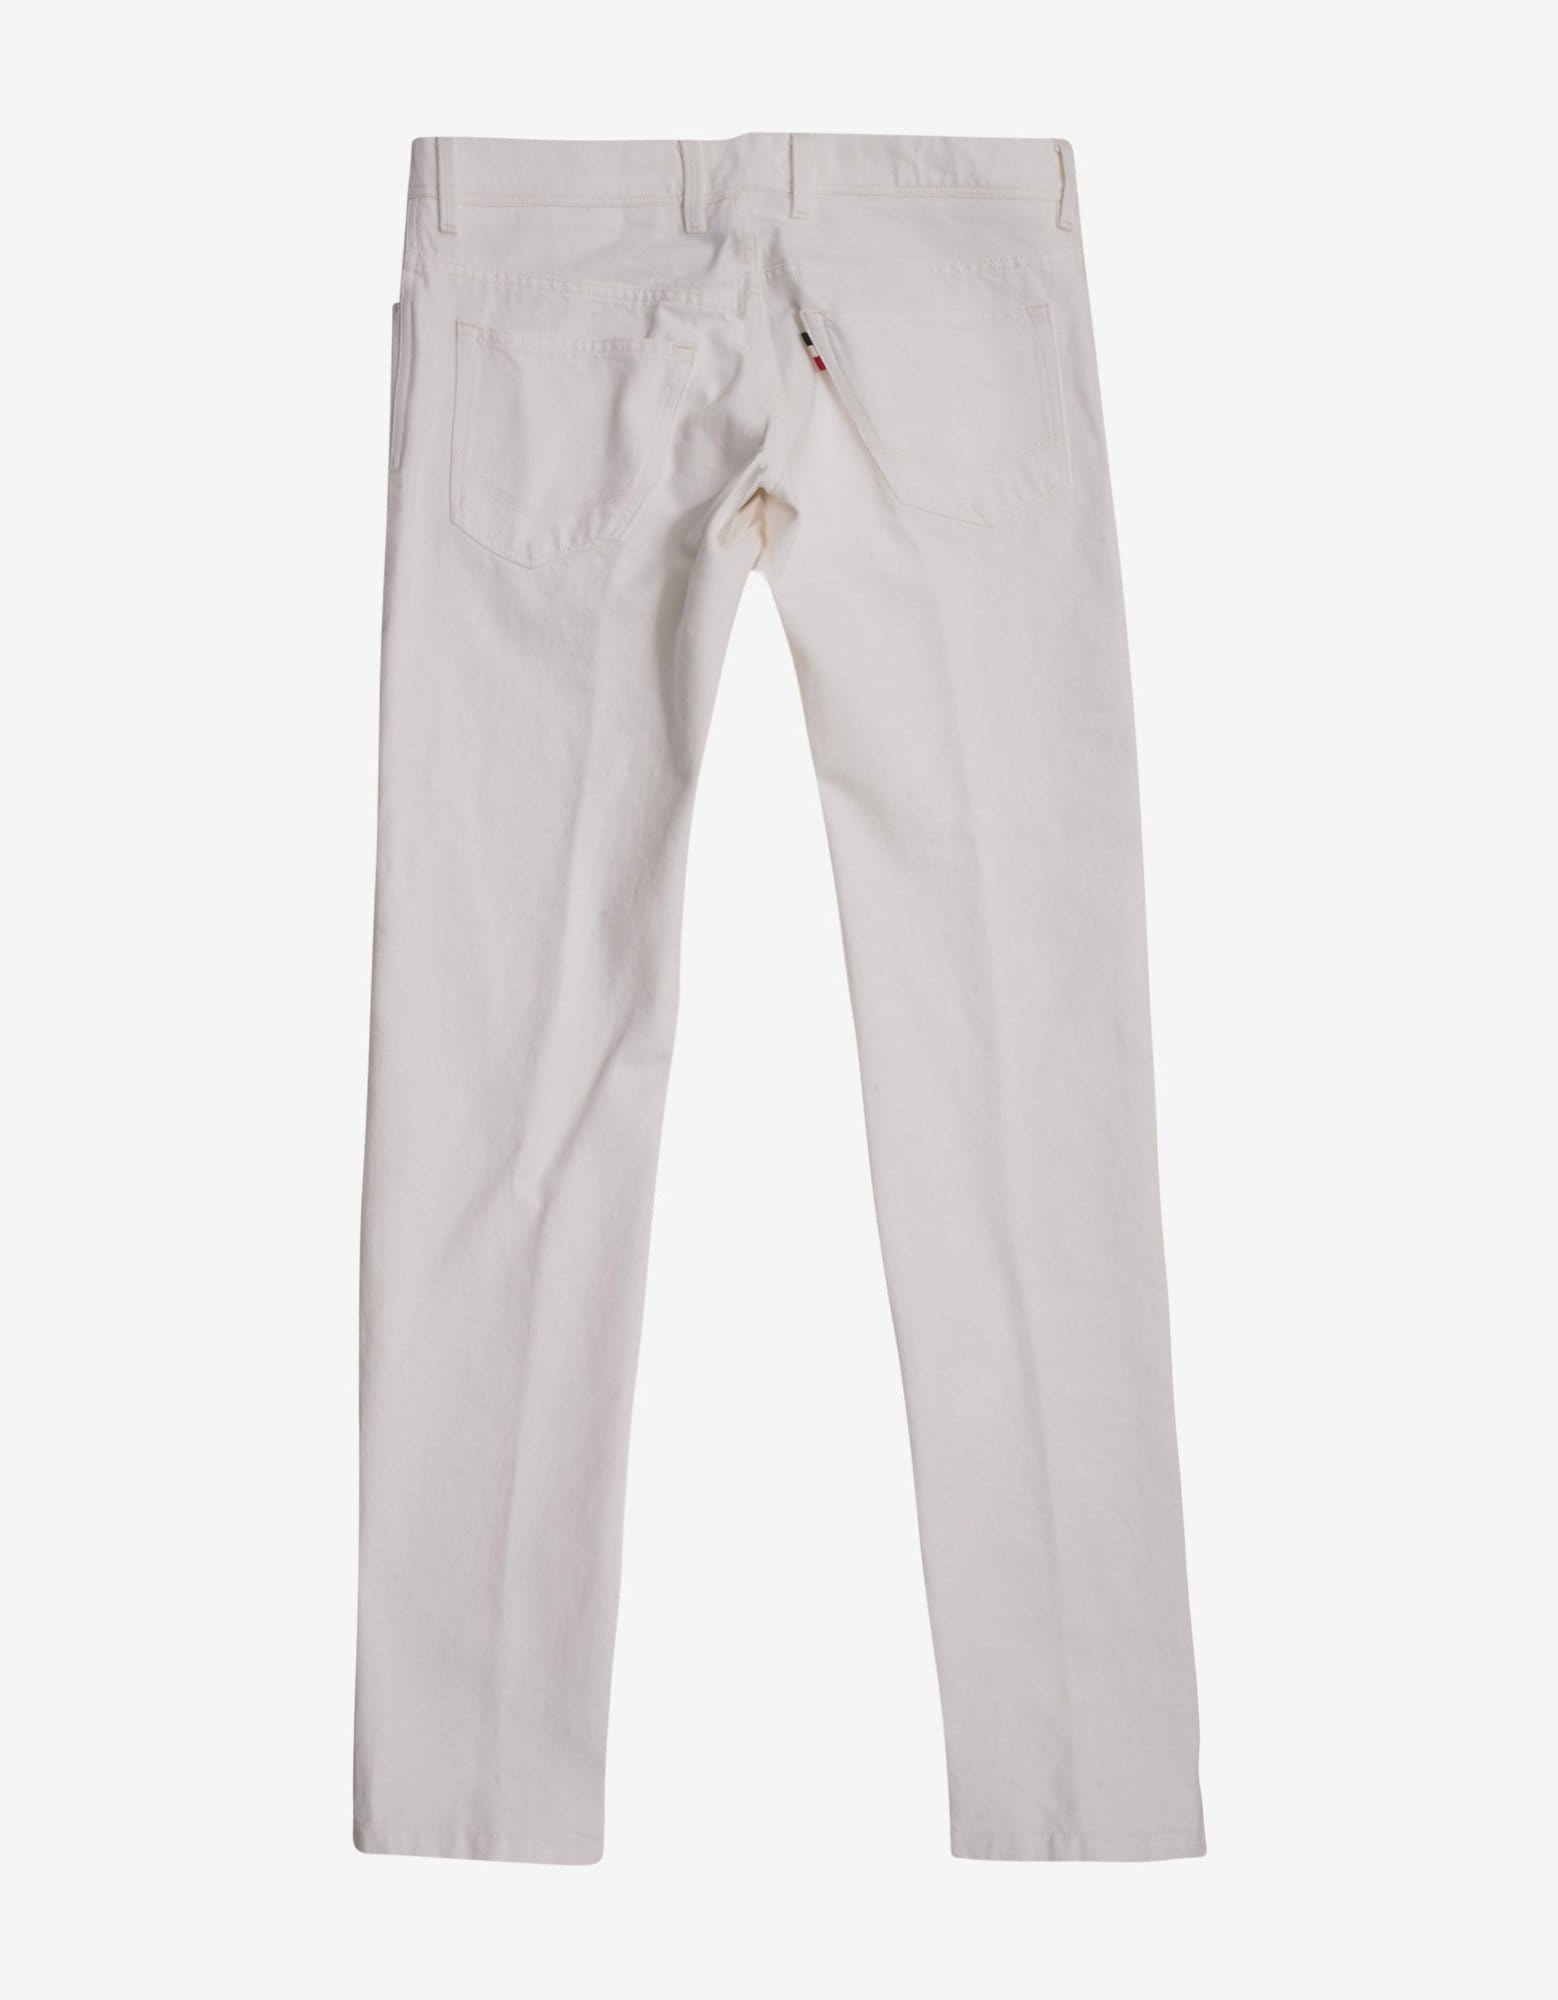 Off-White Denim Jeans - 2